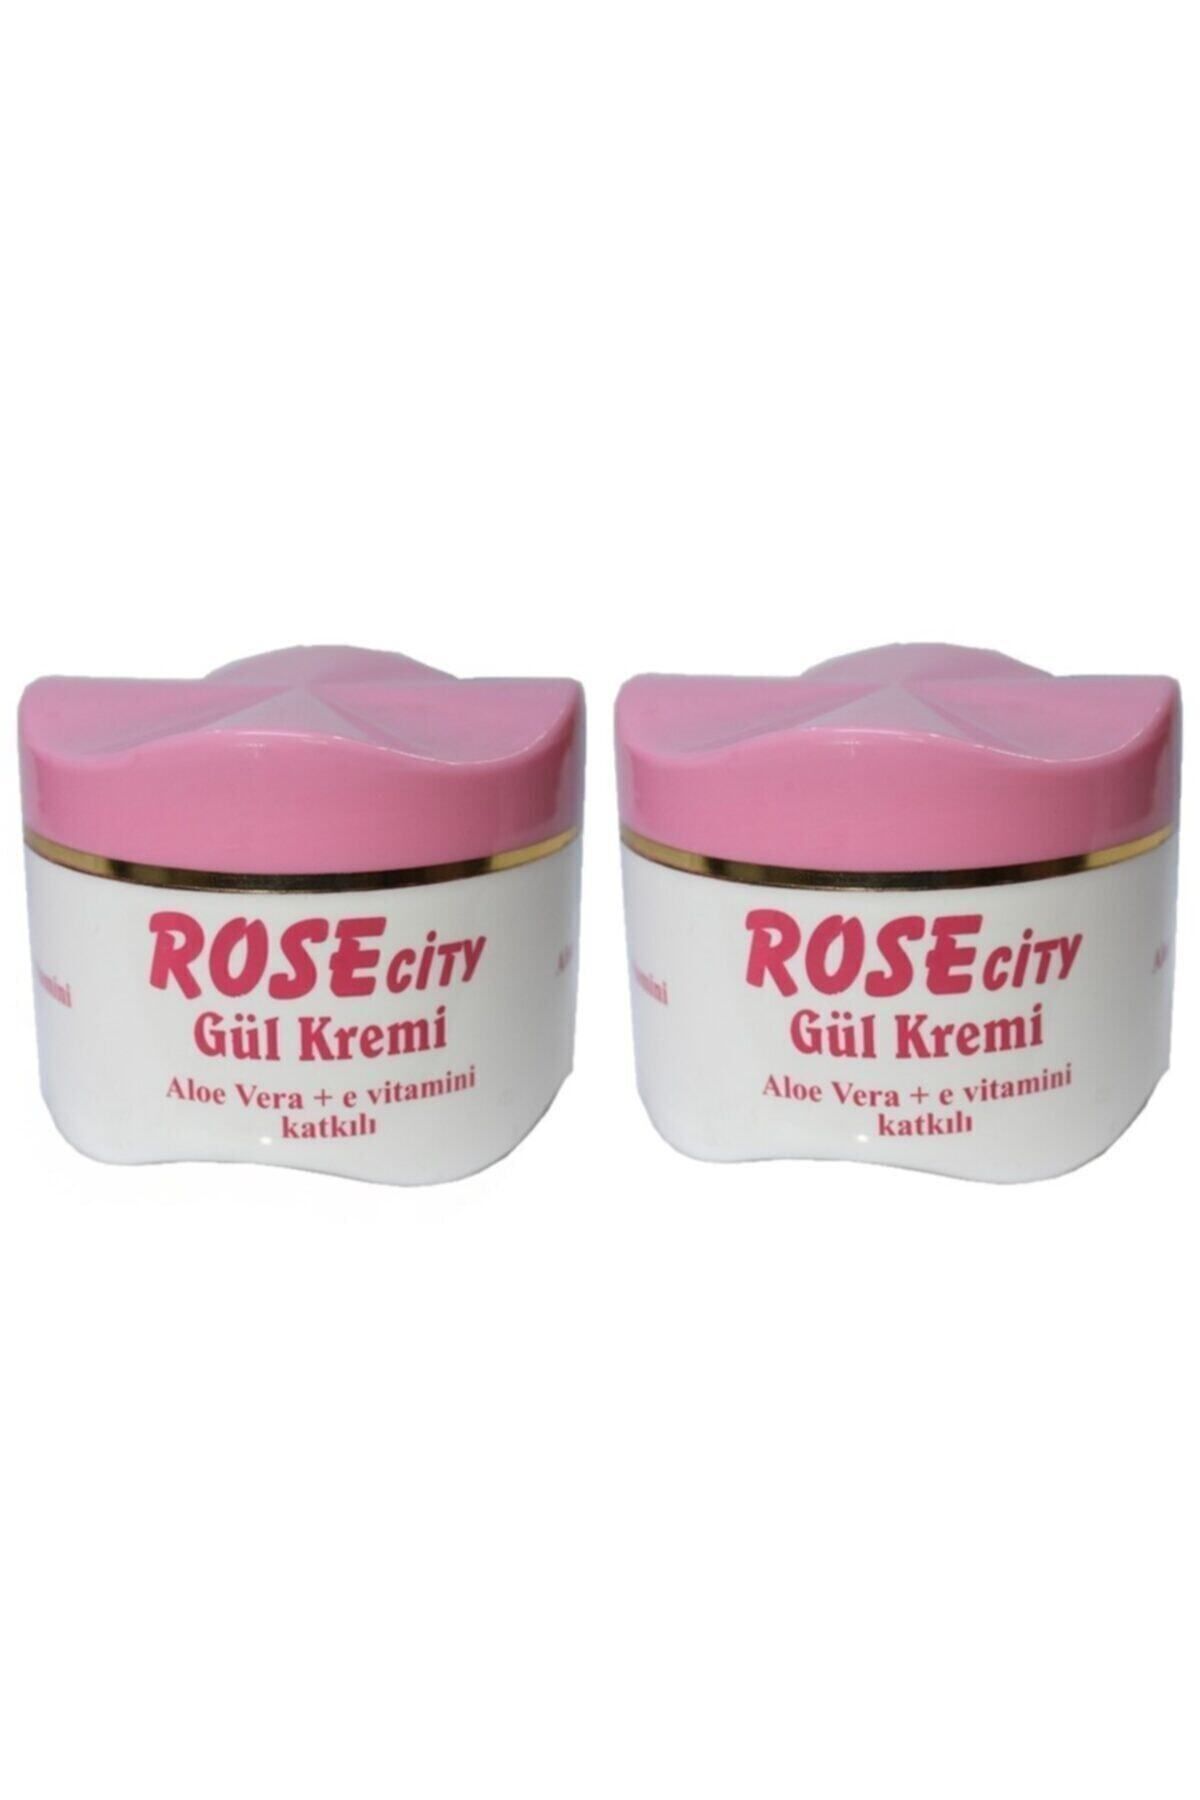 rosecity 2 Adet 275 Ml Gül Kremi Aloevera & E Vitamin